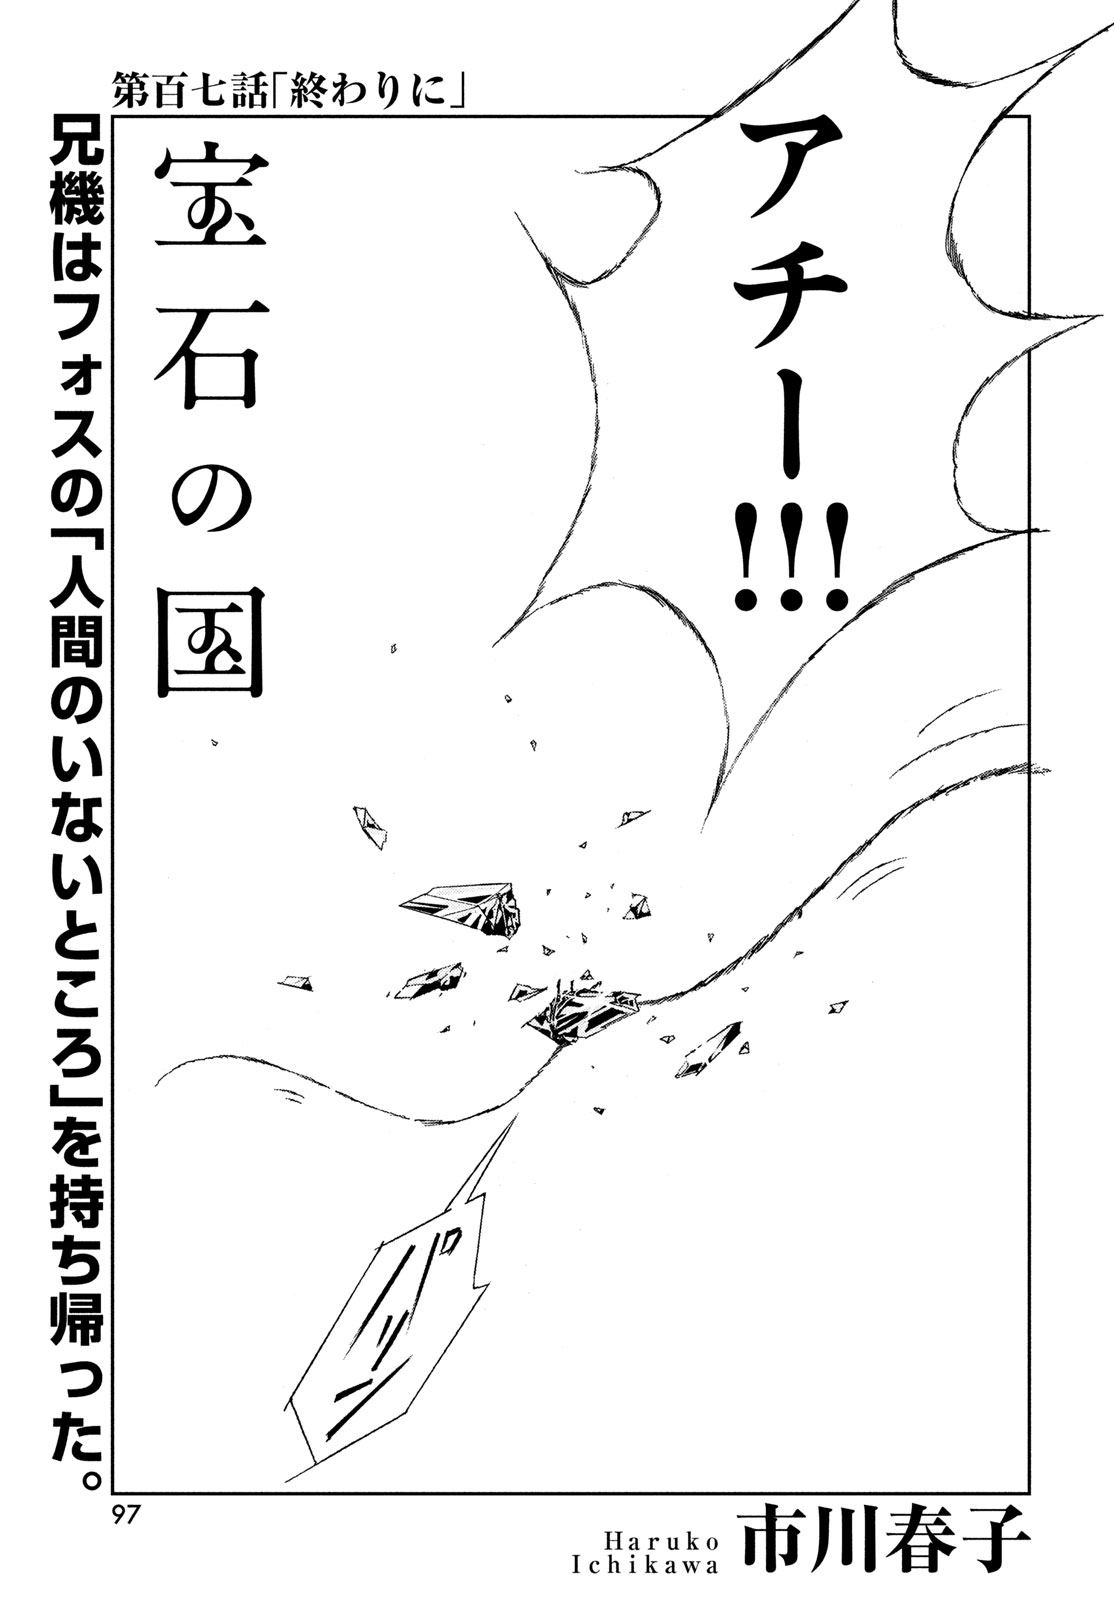 Houseki no Kuni - Chapter 107 - Page 1